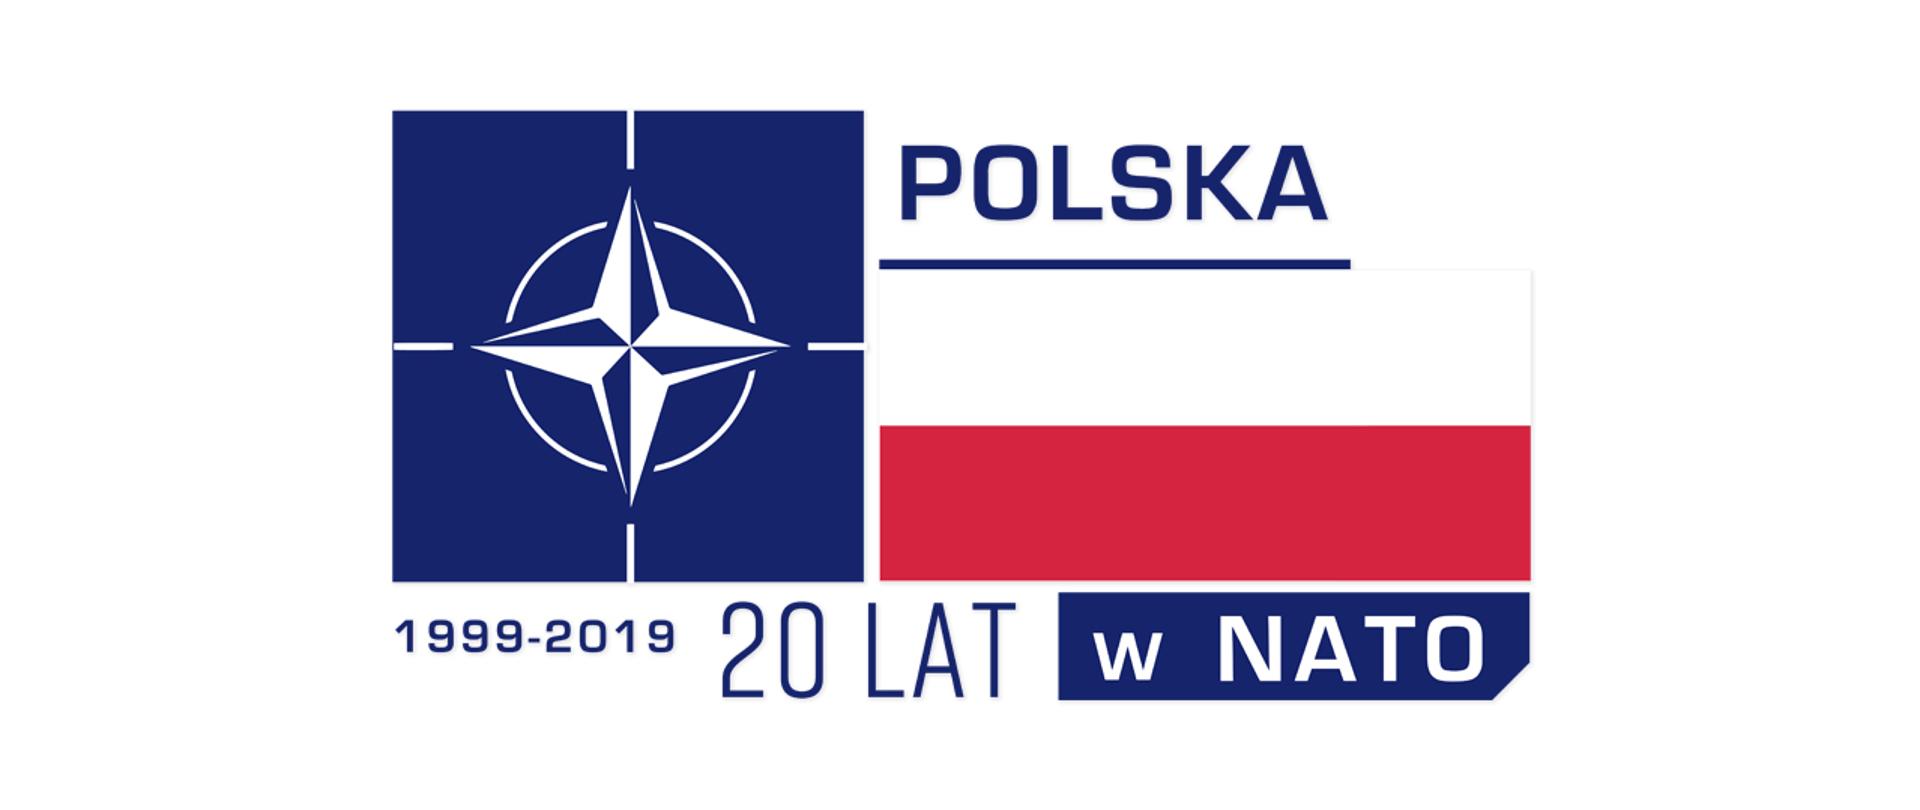 LOGO POLSKA 20 LAT W NATO